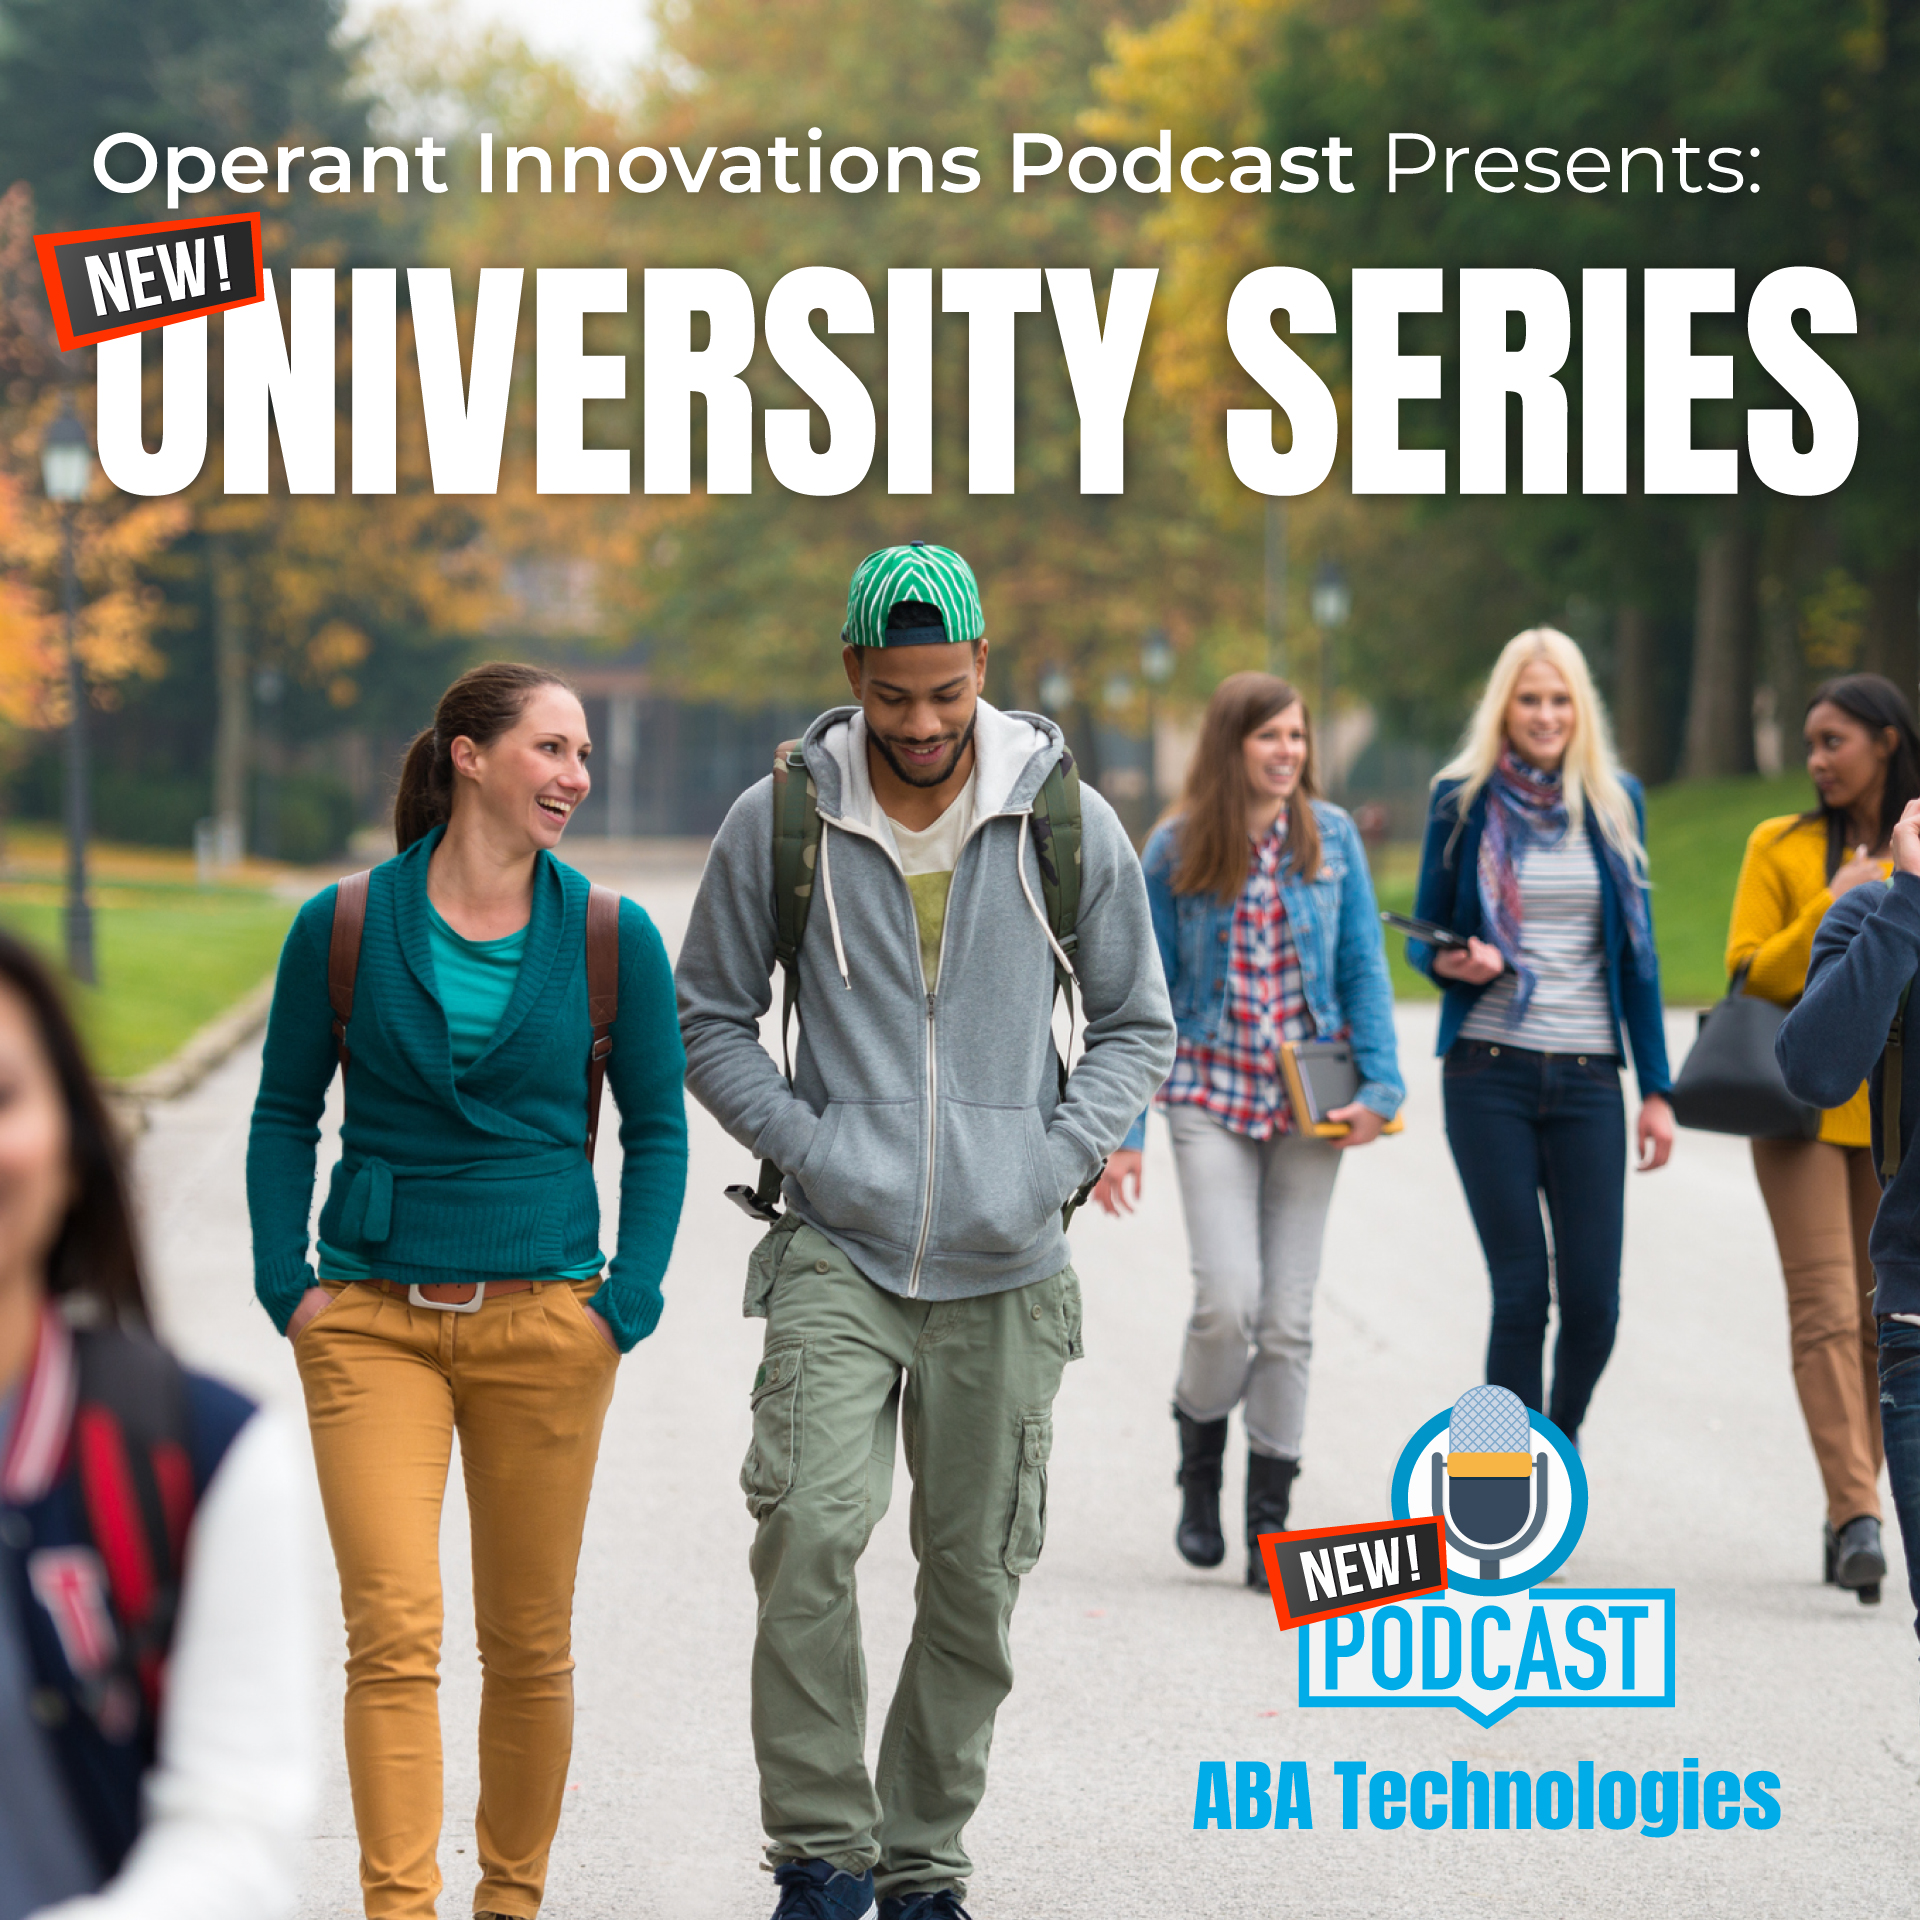 University Series Podcast